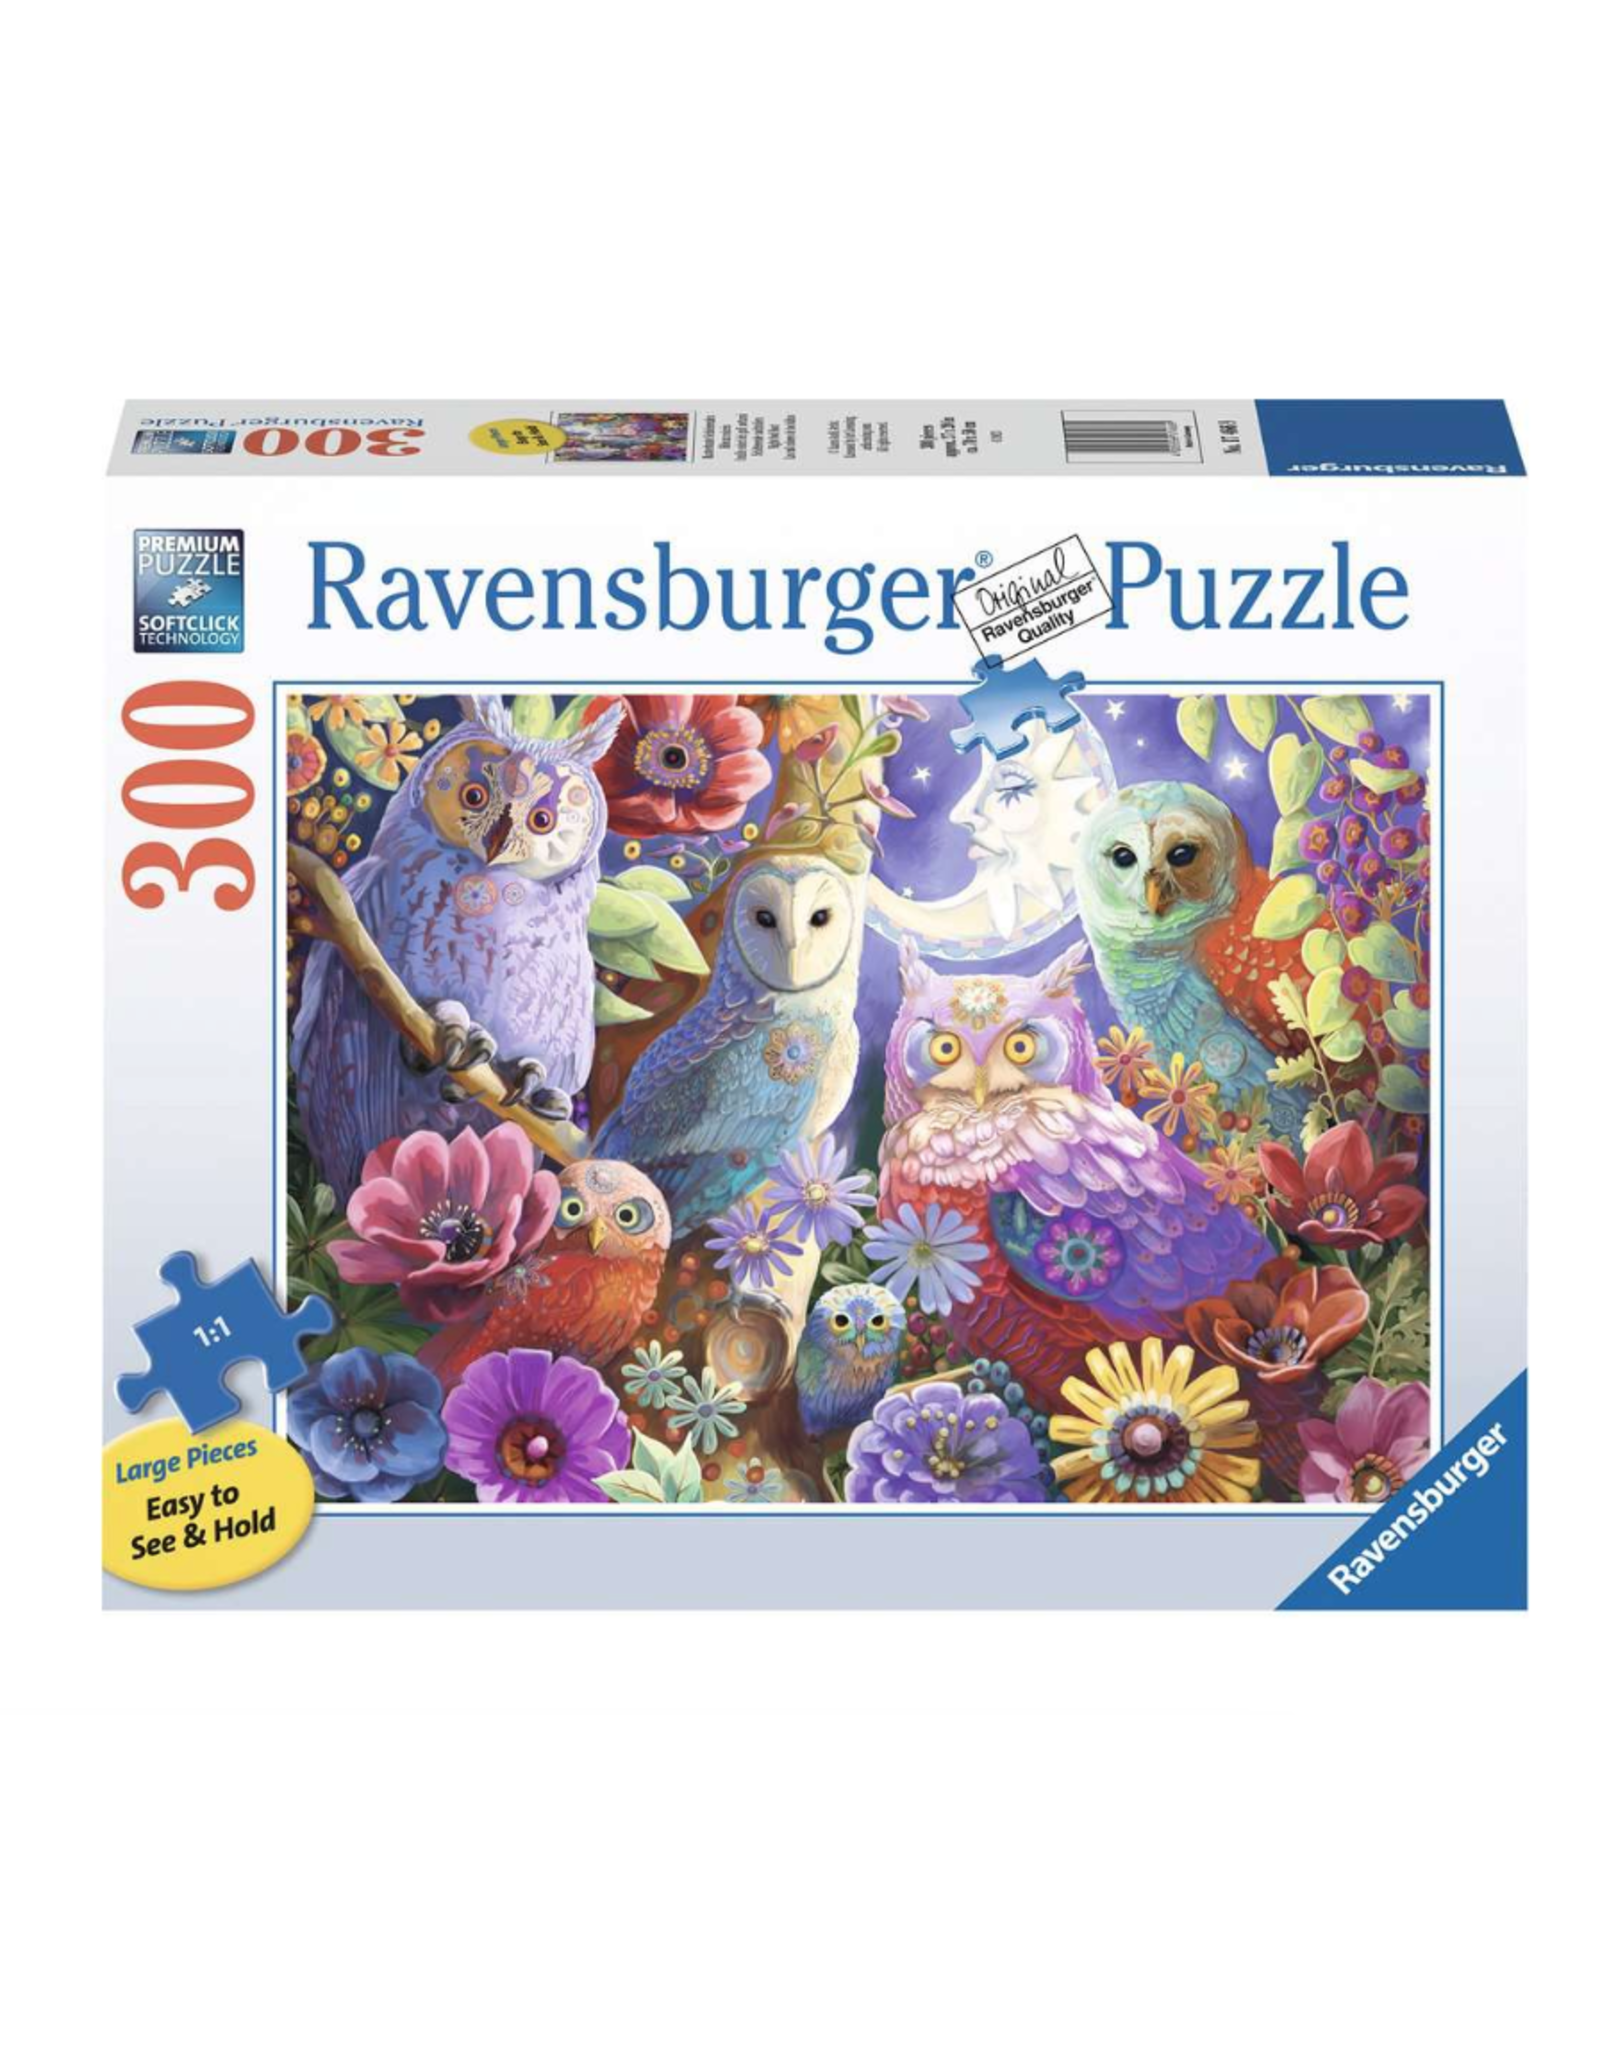 Ravensburger Night Owl Hoot 300 Piece Puzzle